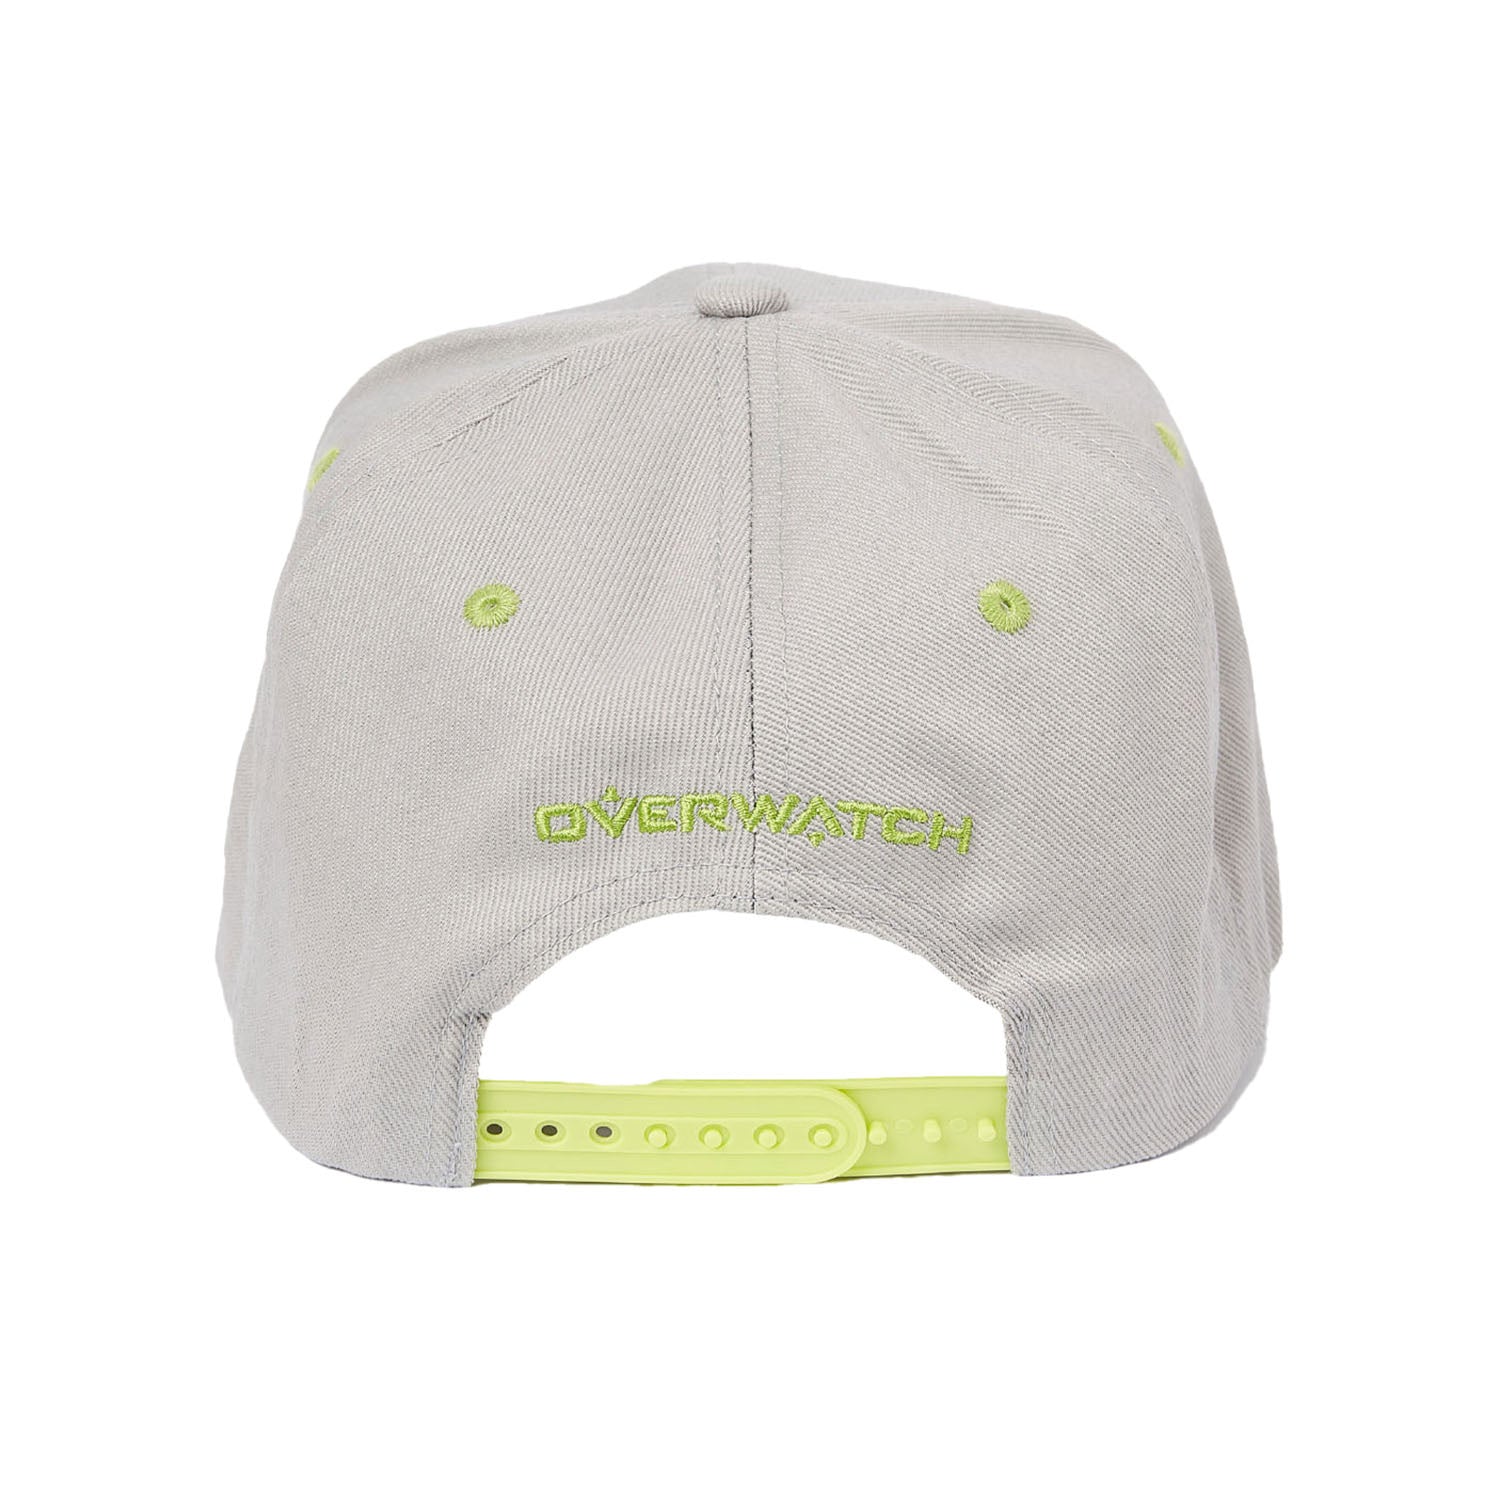 Overwatch Genji Grey Flatbill Snapback Hat - Back View